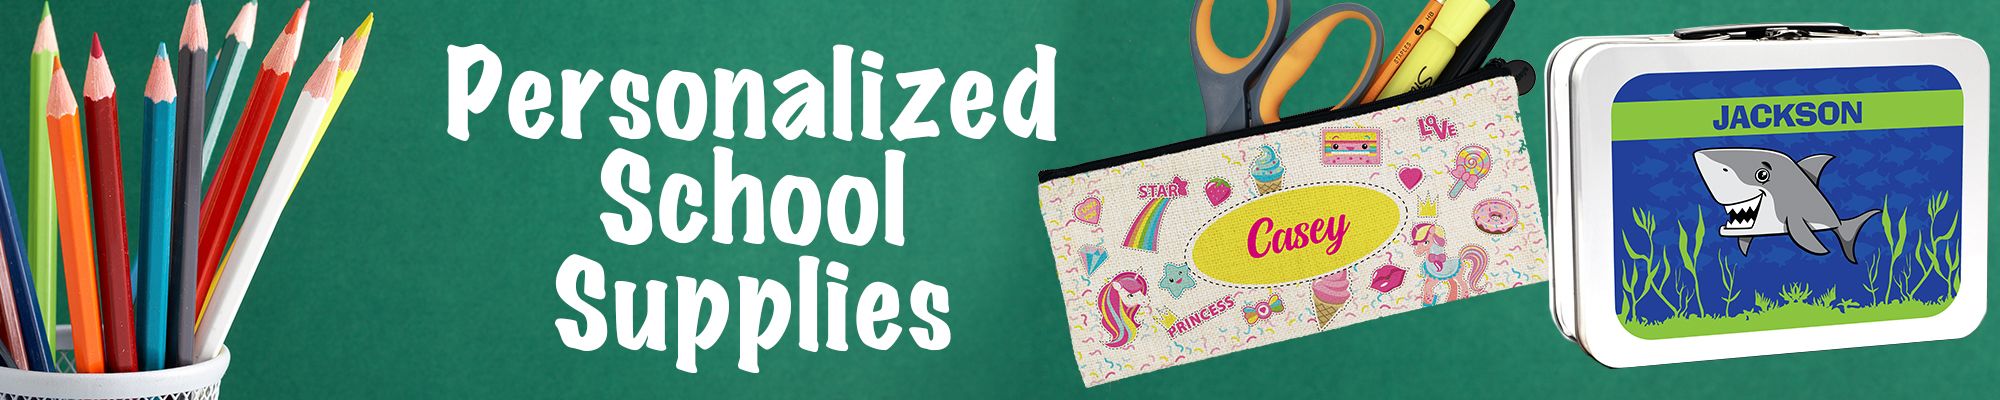 Personalized School Supplies | Custom School Supplies for Kids